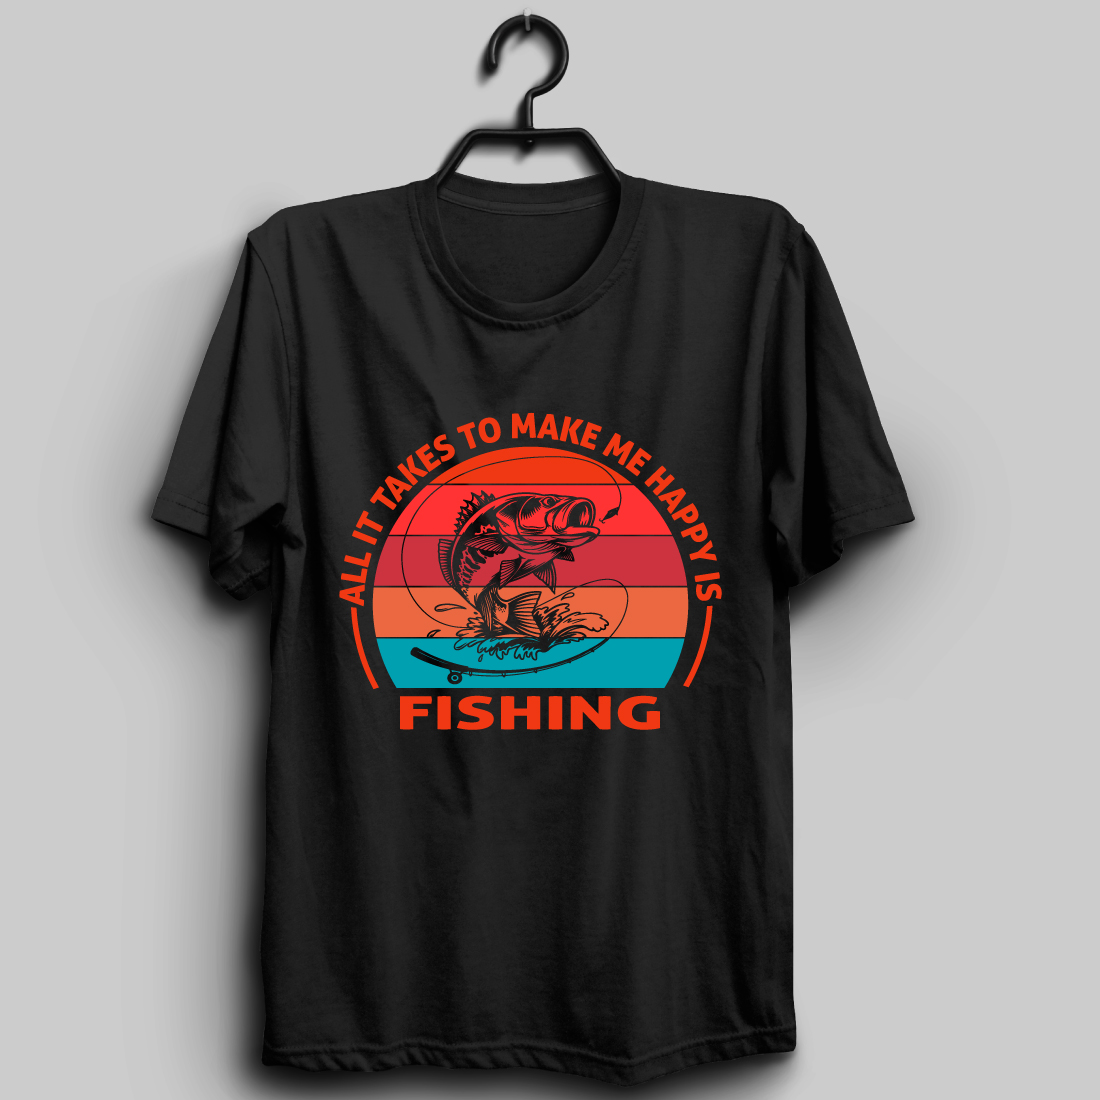 fishing t shirt design02 106